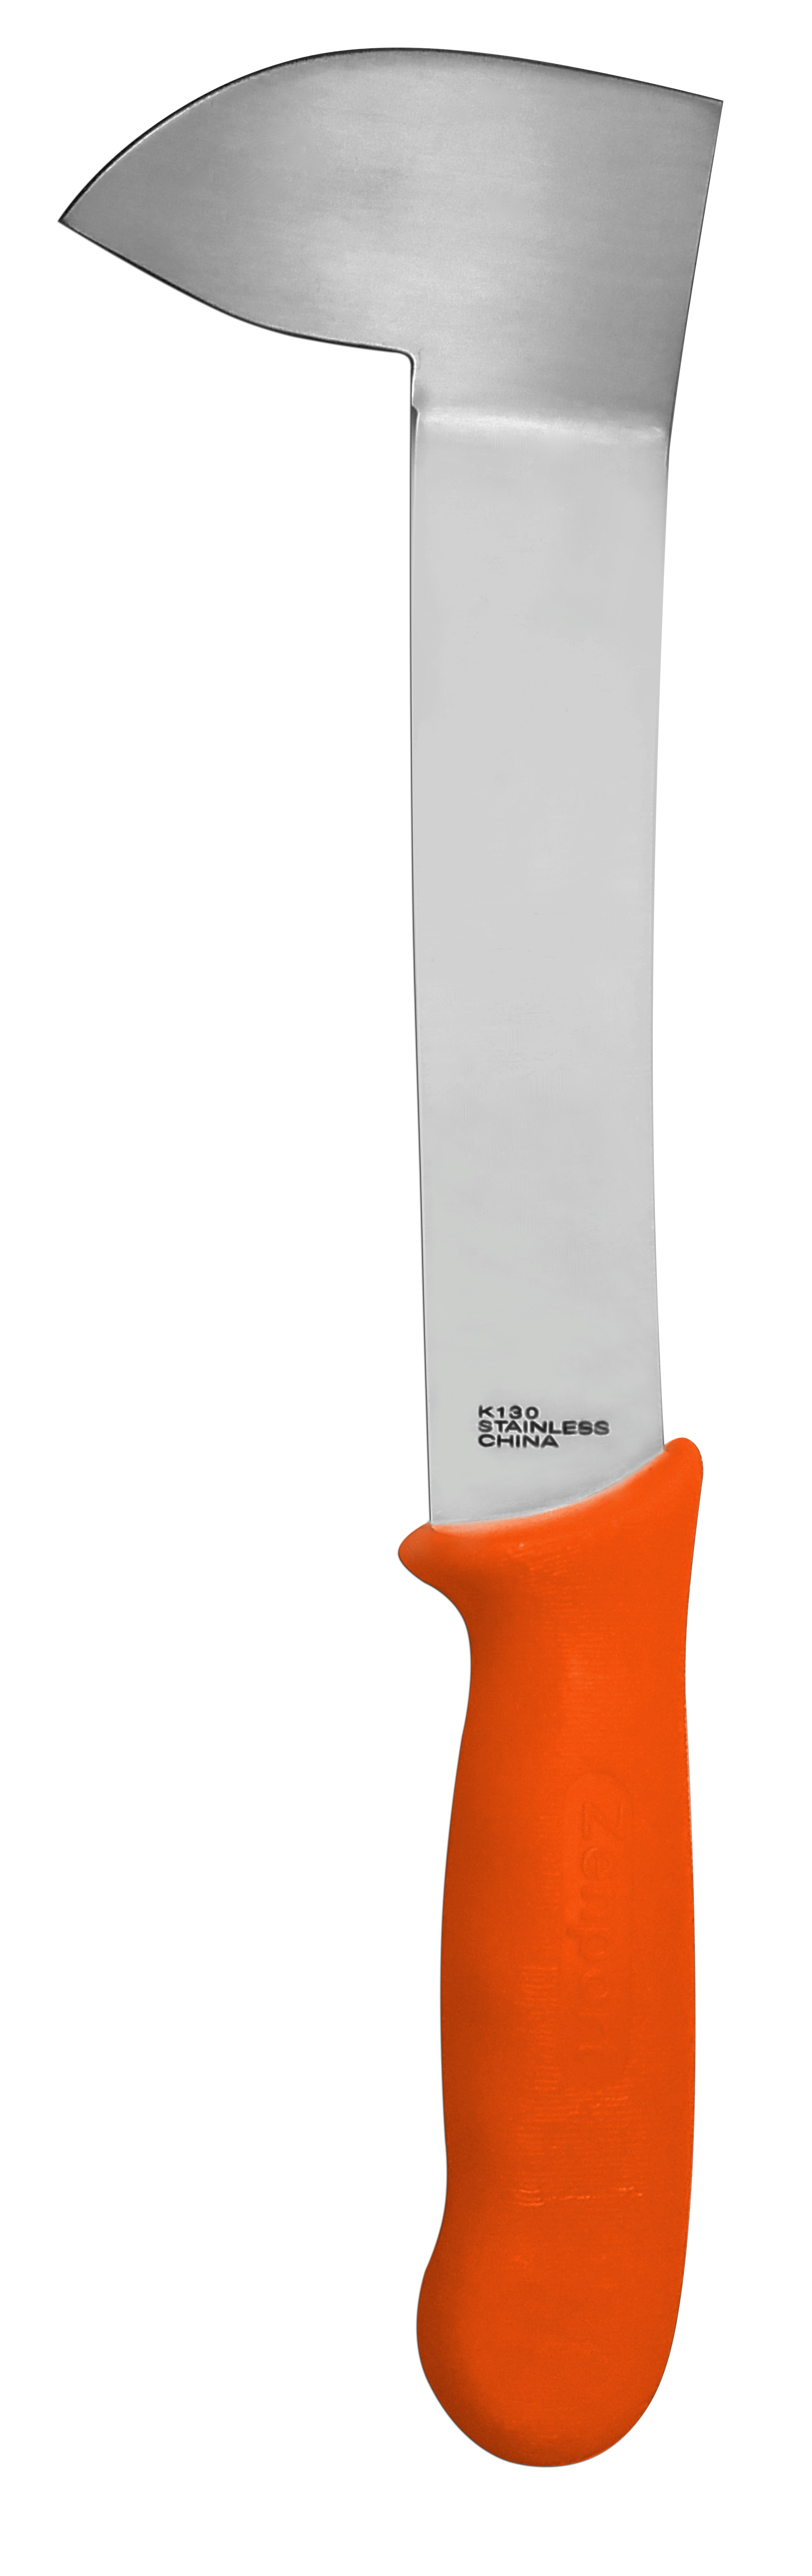 Zenport K130 Celery Harvest Knife, Stainless Steel 8.5-Inch Blade, Orange Plastic Handle